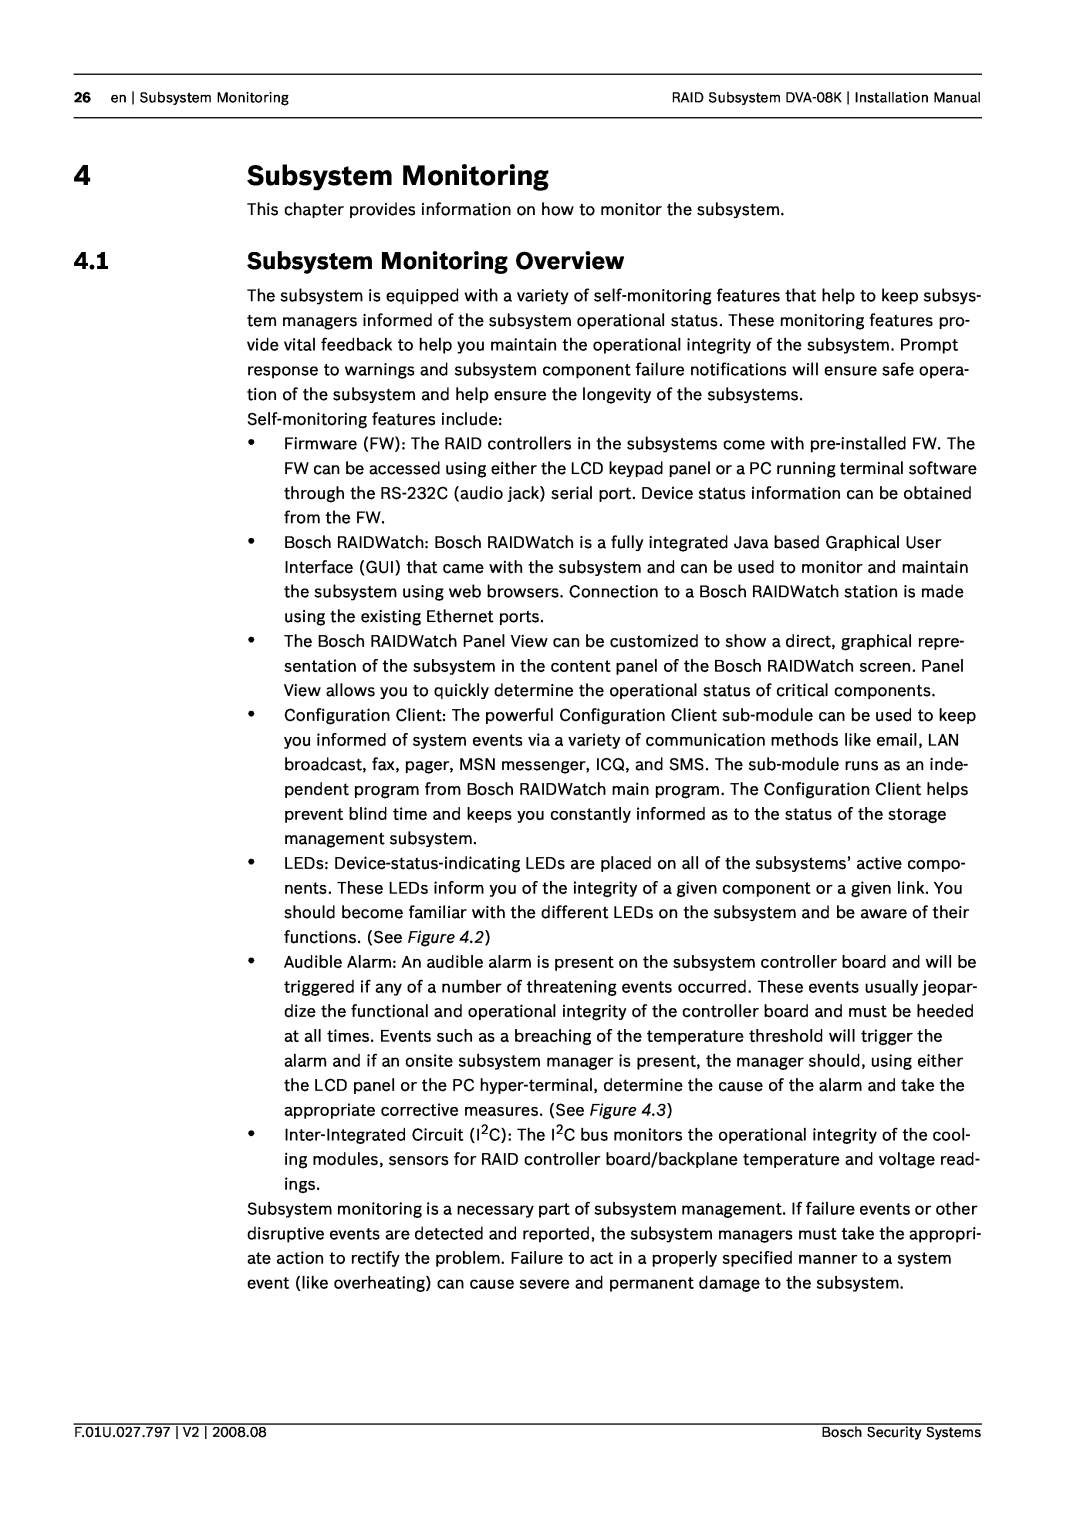 Bosch Appliances DVA-08K manual Subsystem Monitoring Overview 